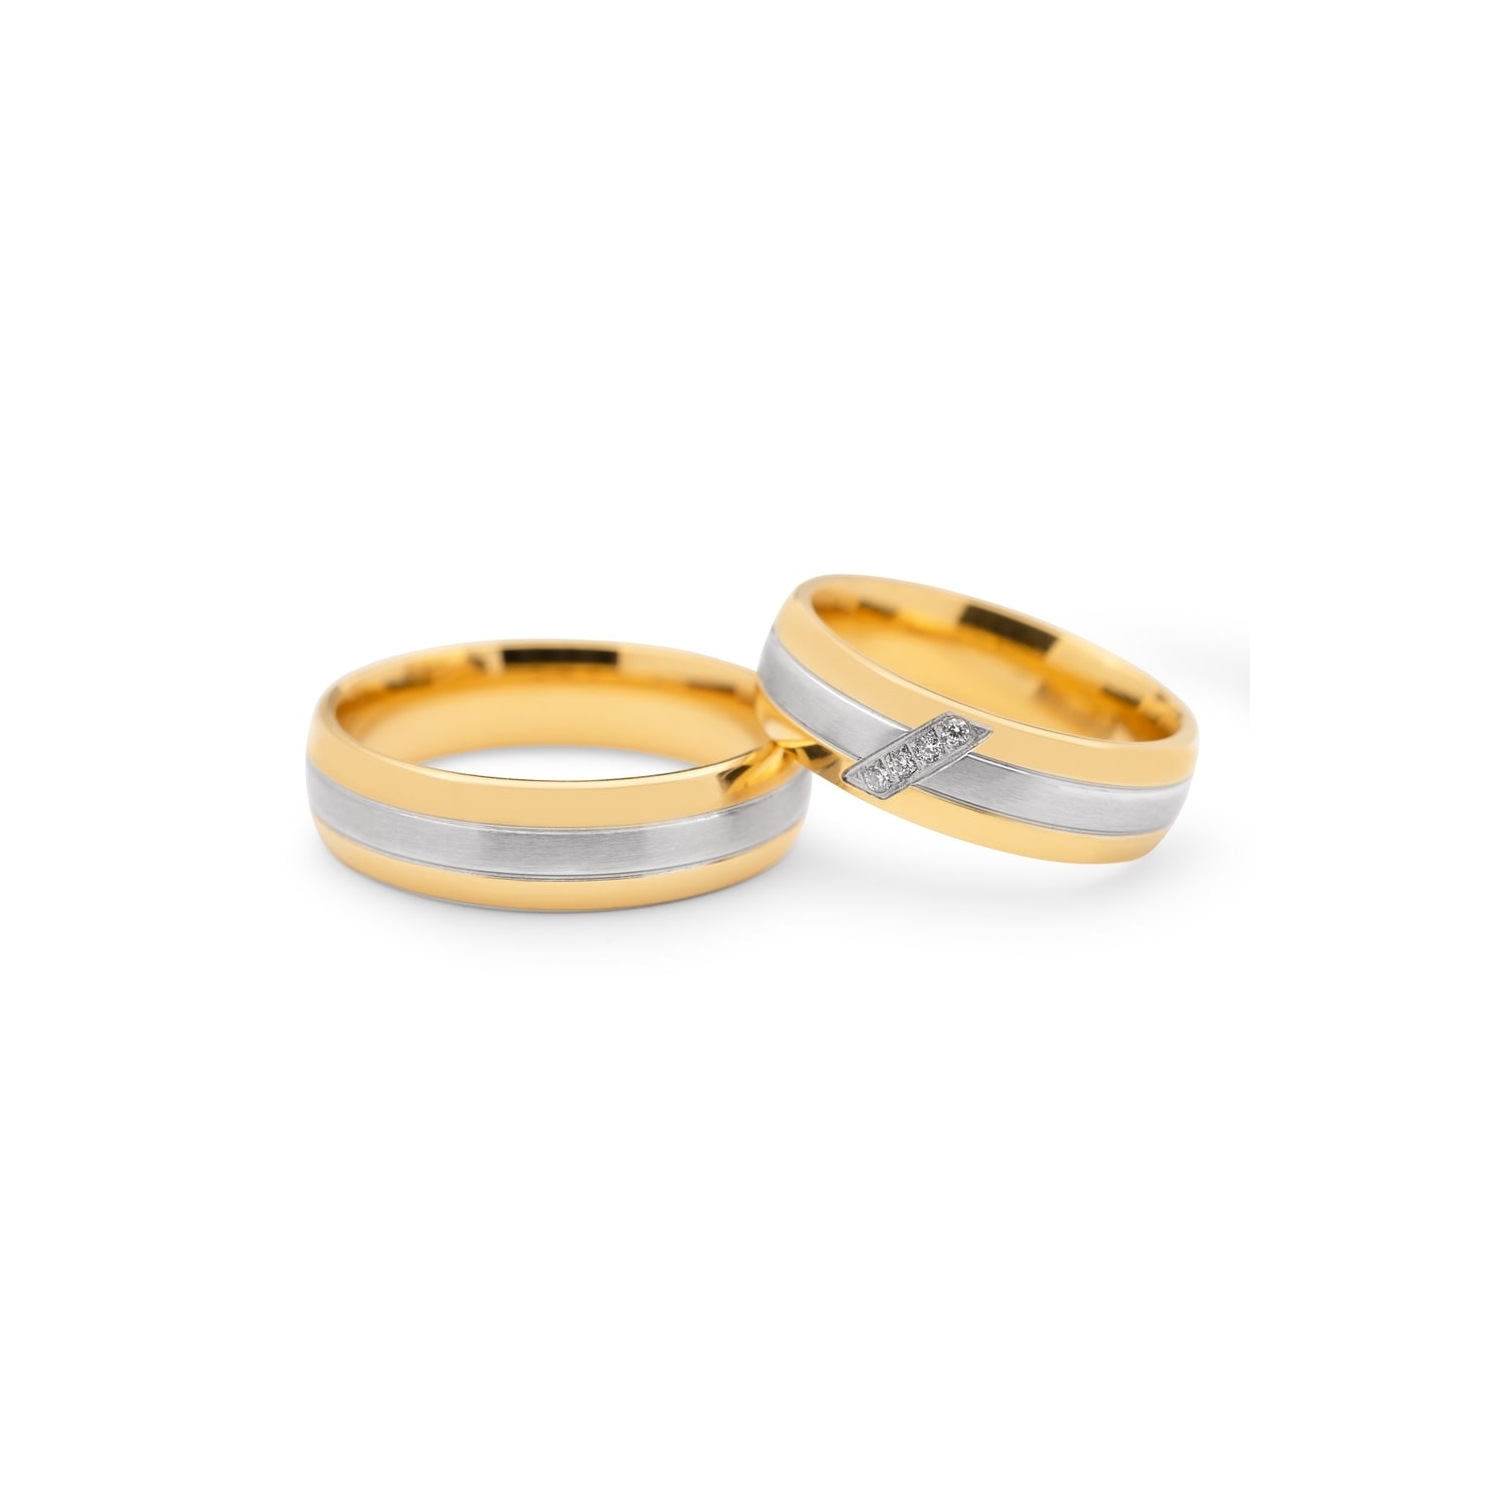 Golden wedding rings with diamonds "VKA 096"